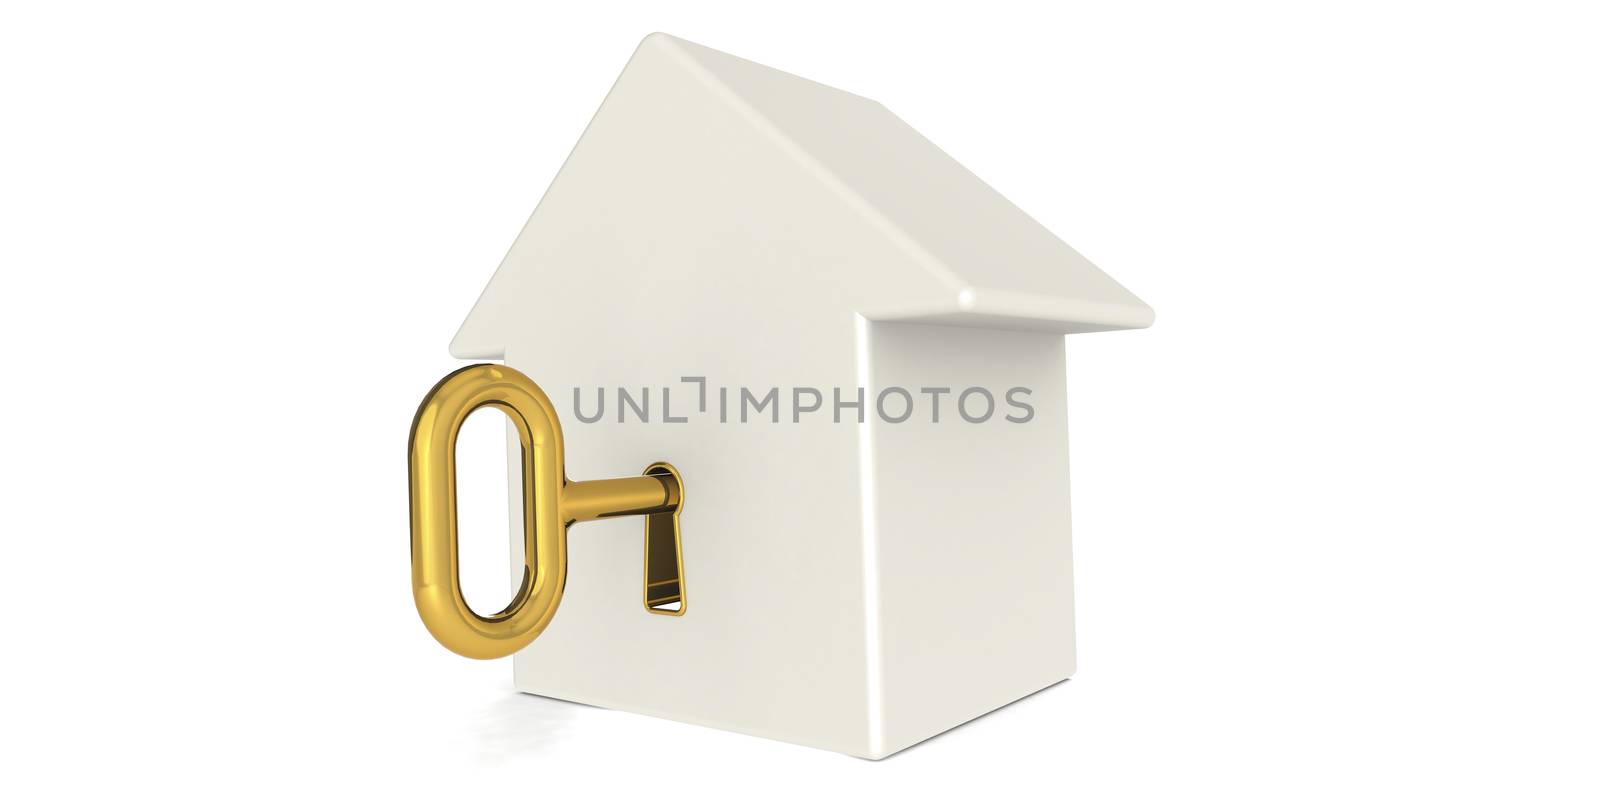 Golden key to unlock the housing, 3d rendering